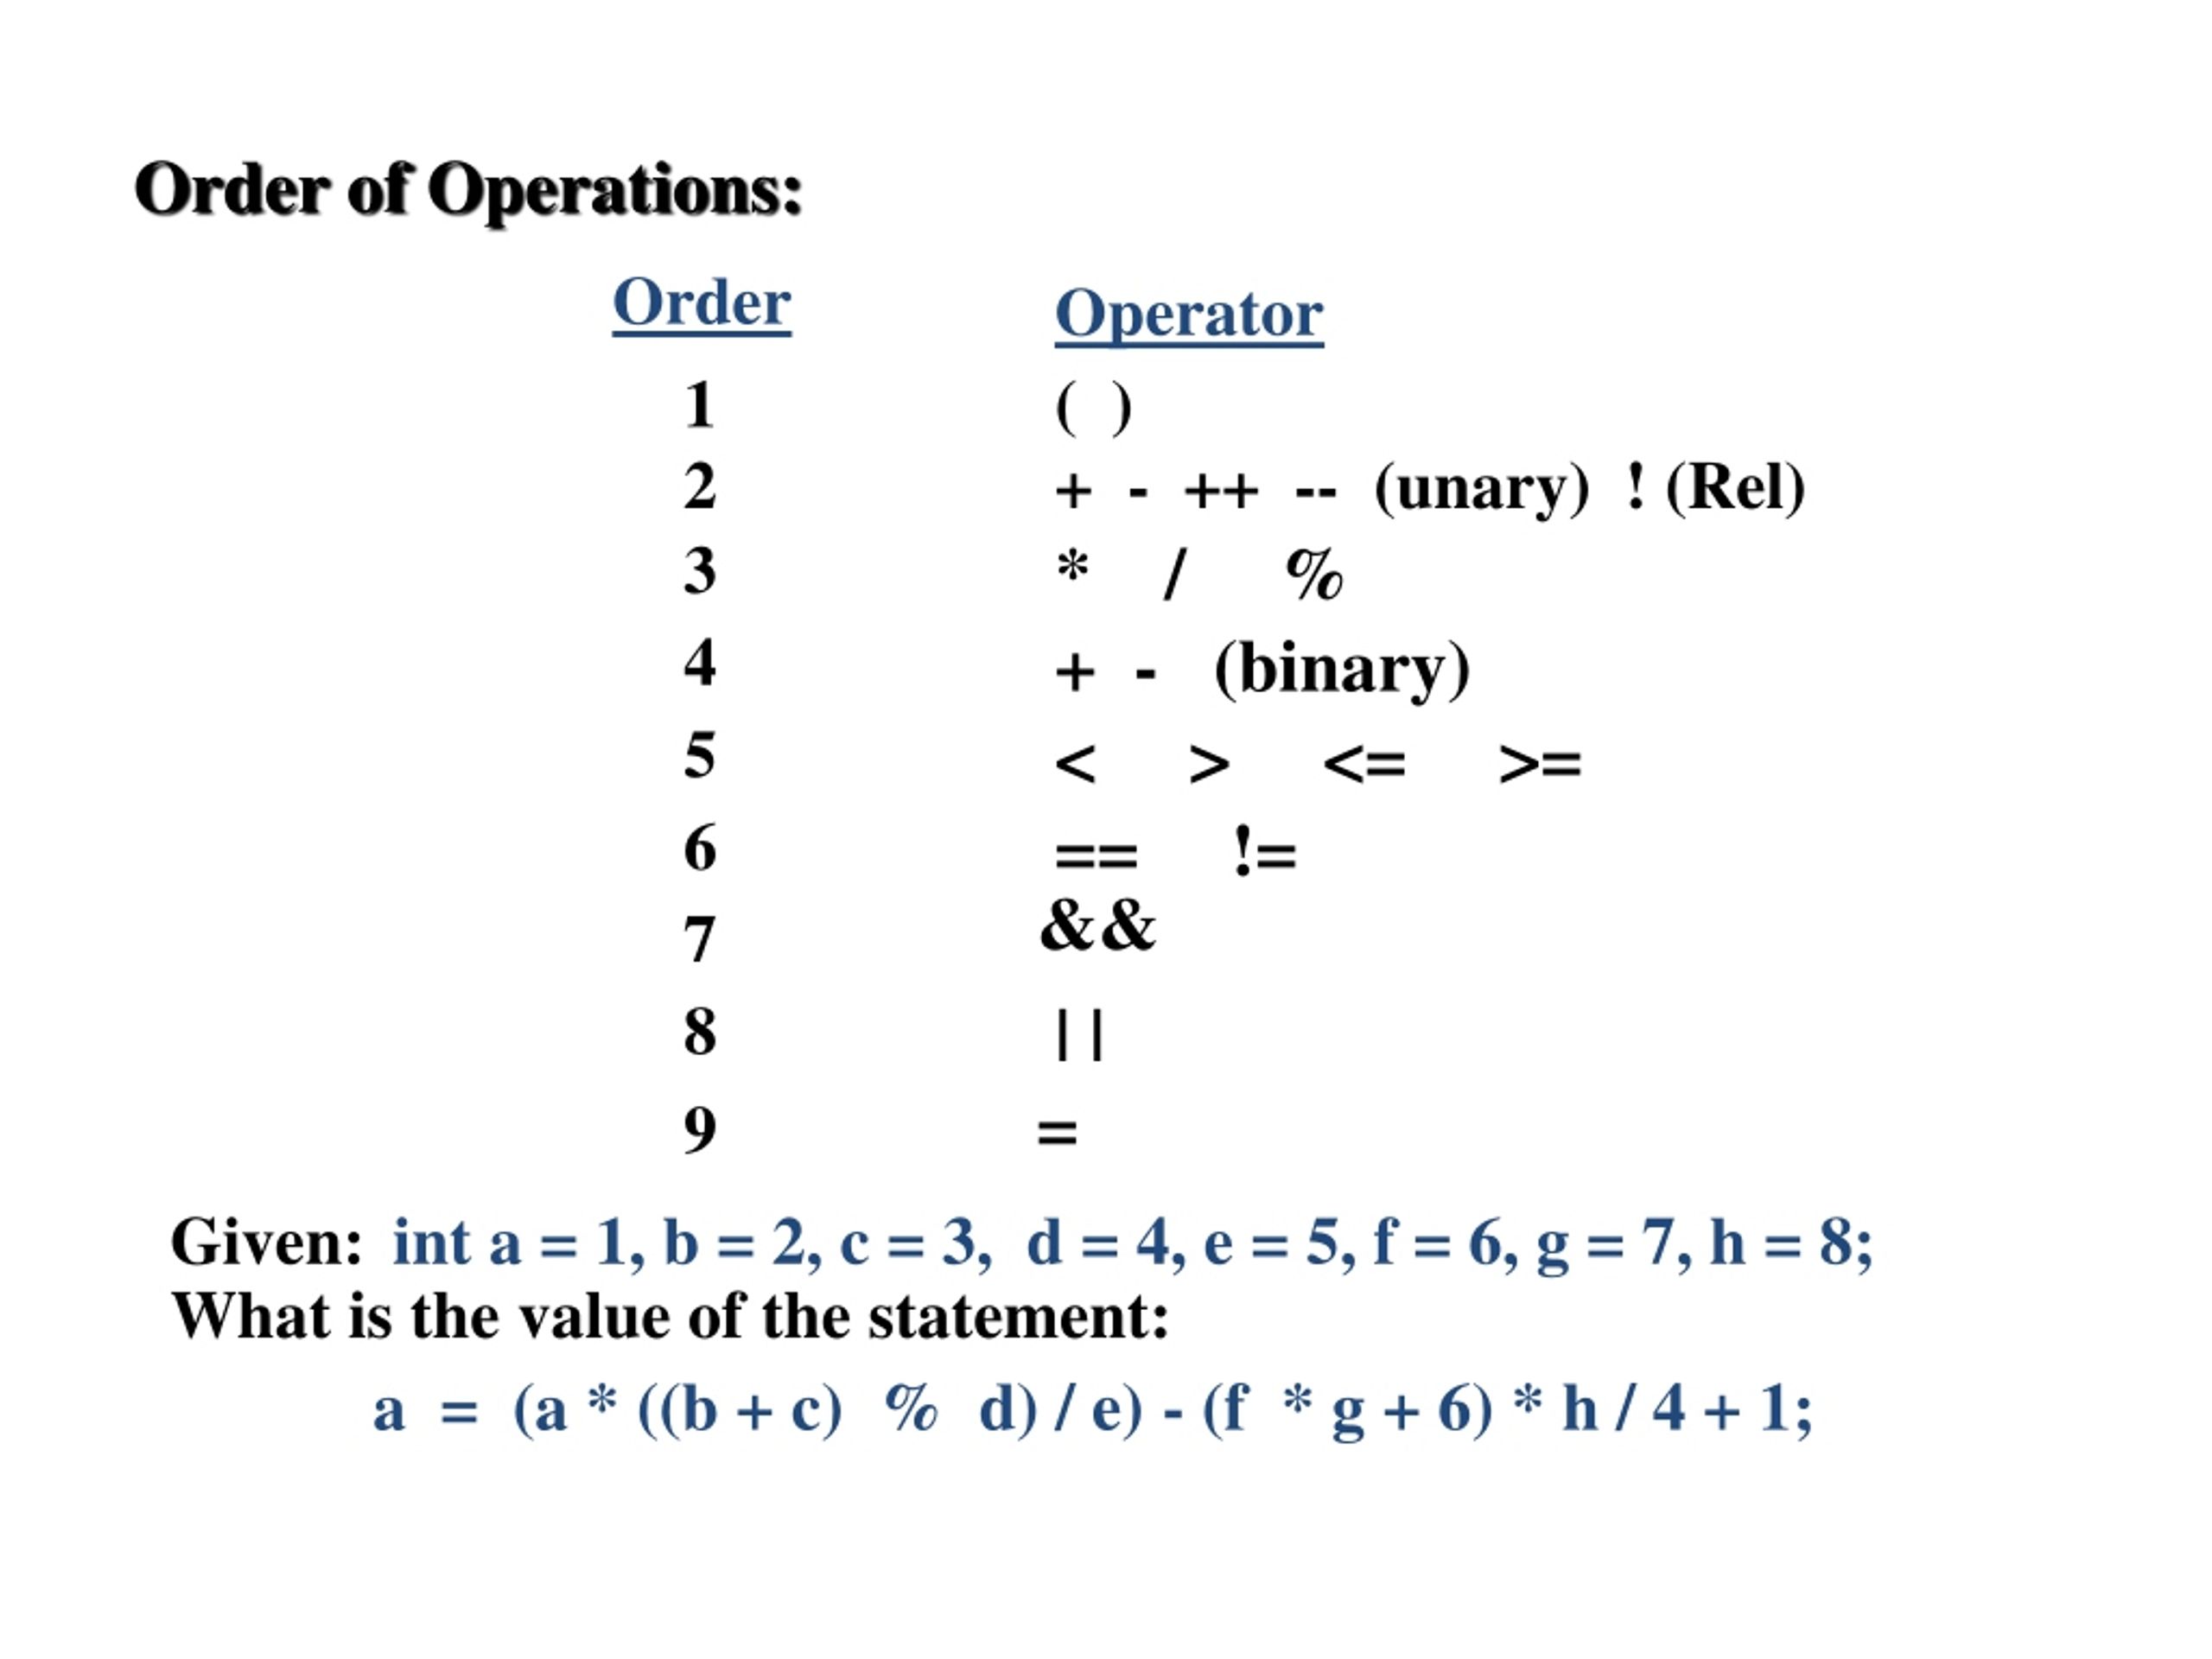 Operations orders. Order of Operations. Бинарные операторы. Operator c++. Add Logic Operators.